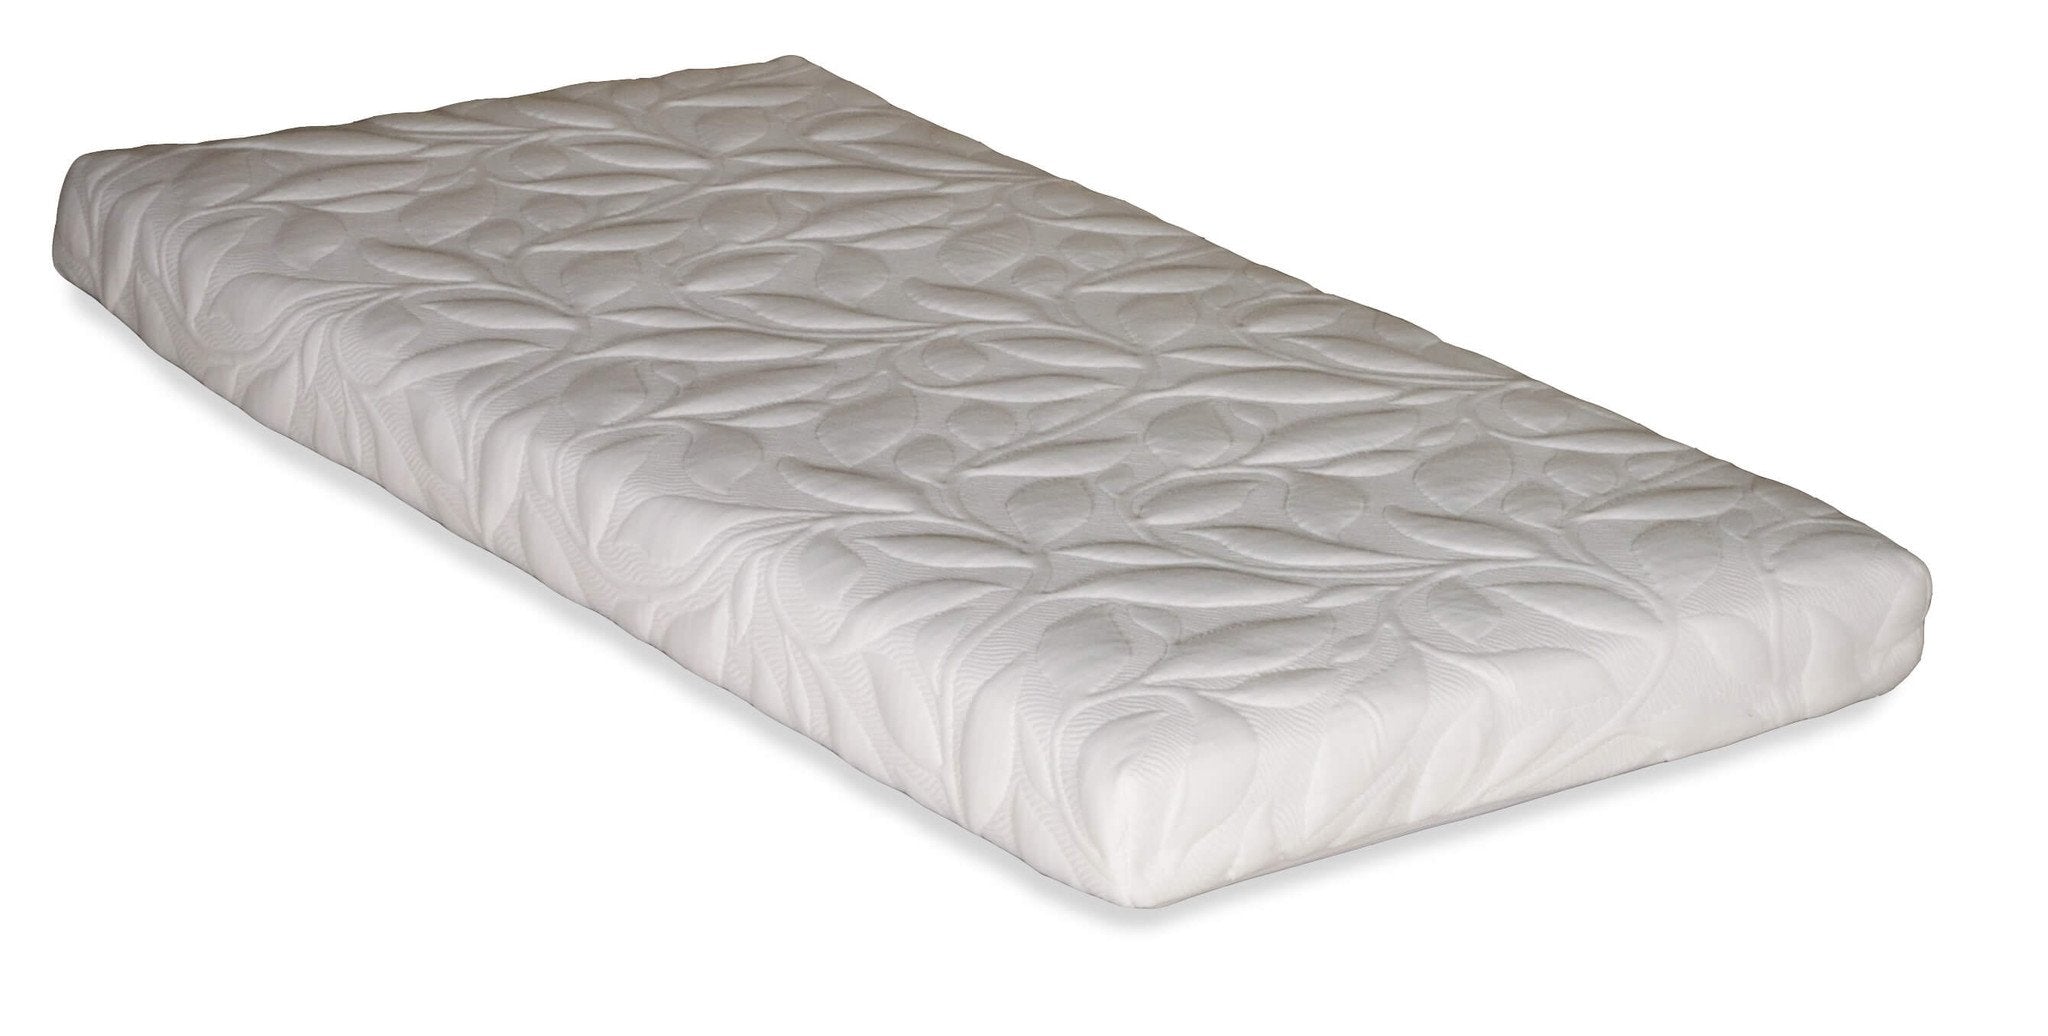 cot size foam mattress topper